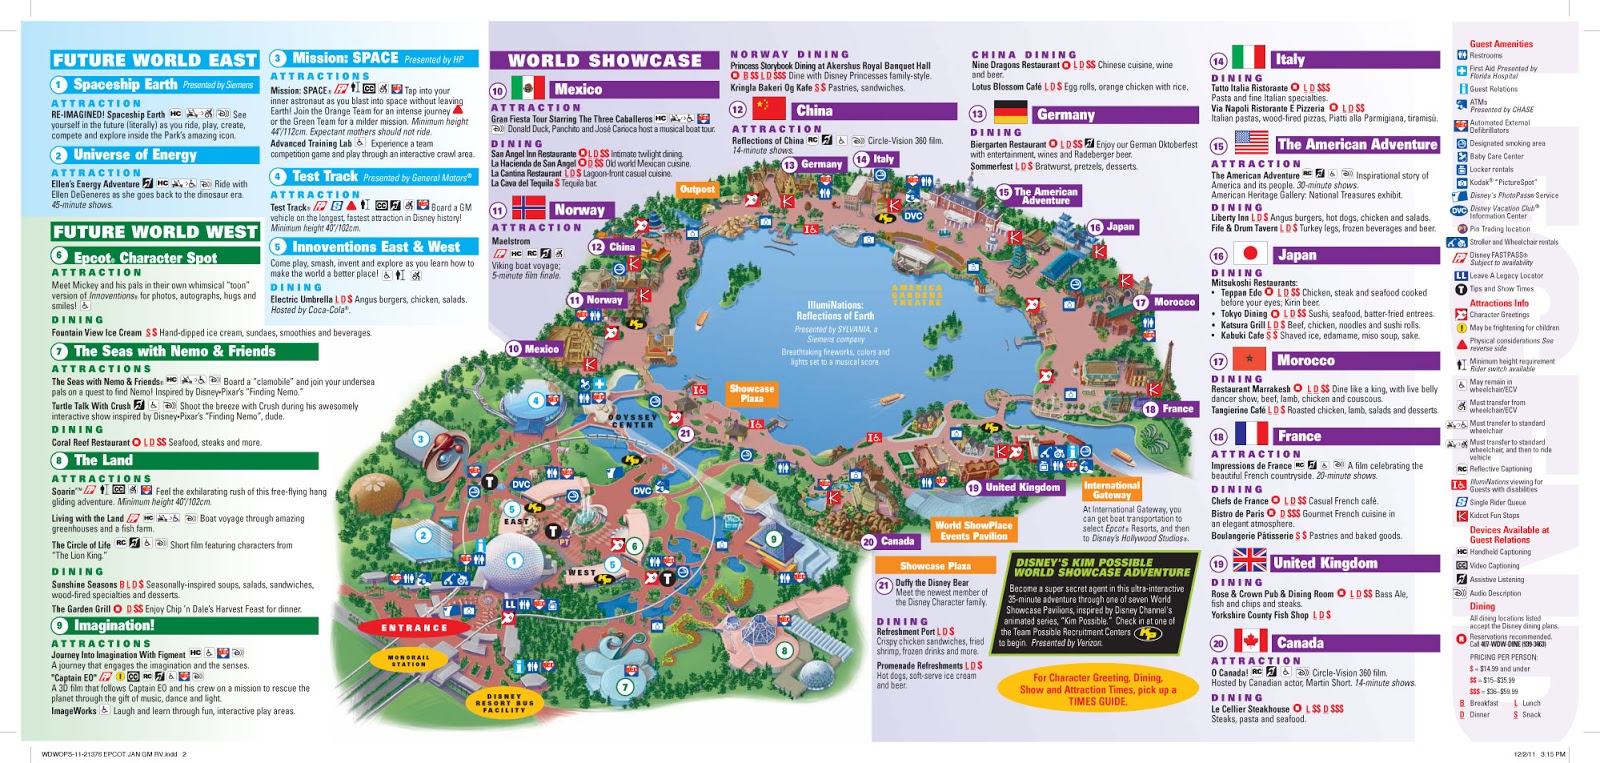 Parkscope: The New Walt Disney World Guide Maps